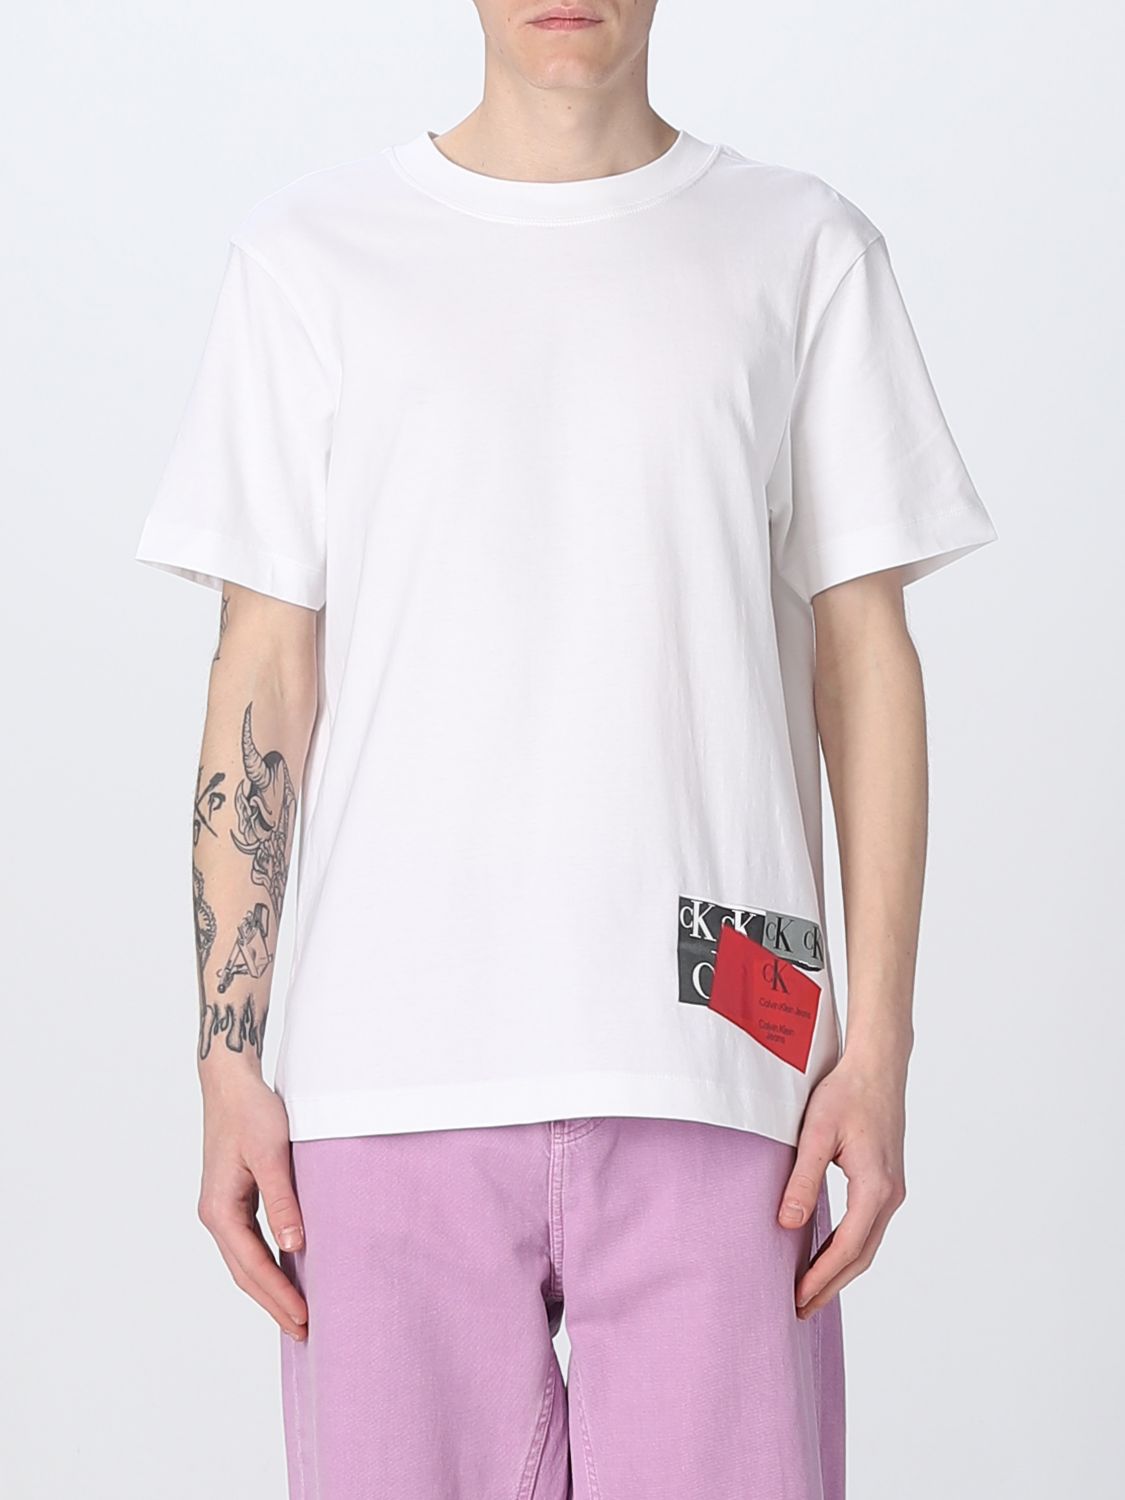 CALVIN KLEIN JEANS: t-shirt for man - White | Calvin Klein Jeans t-shirt  J30J322673 online on 